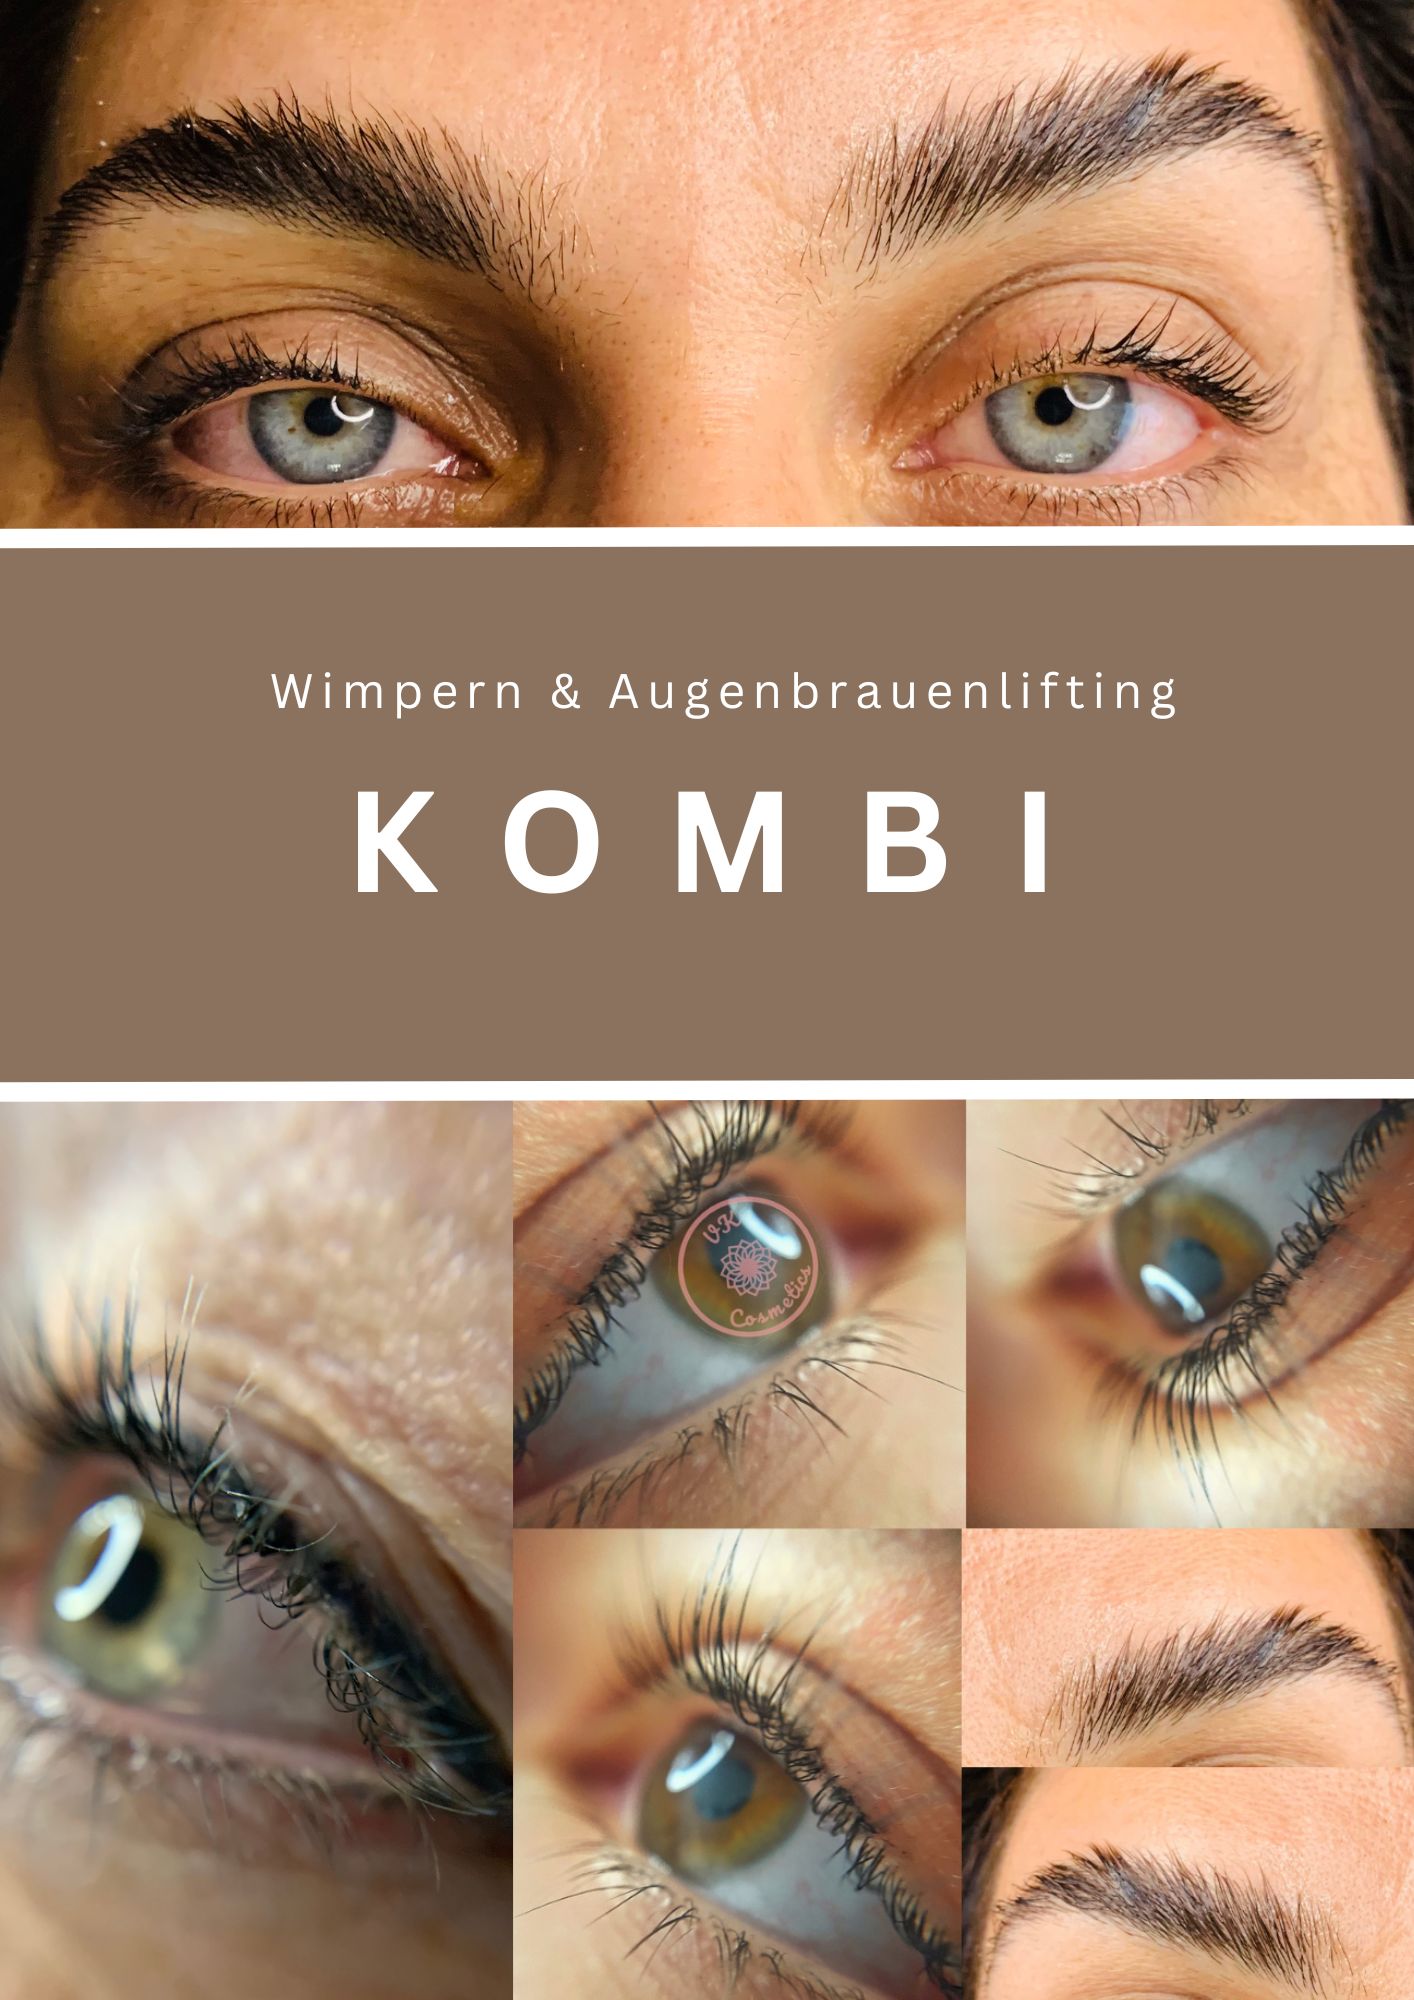 Wimpern & Augenbrauenlifting (KOMBI)